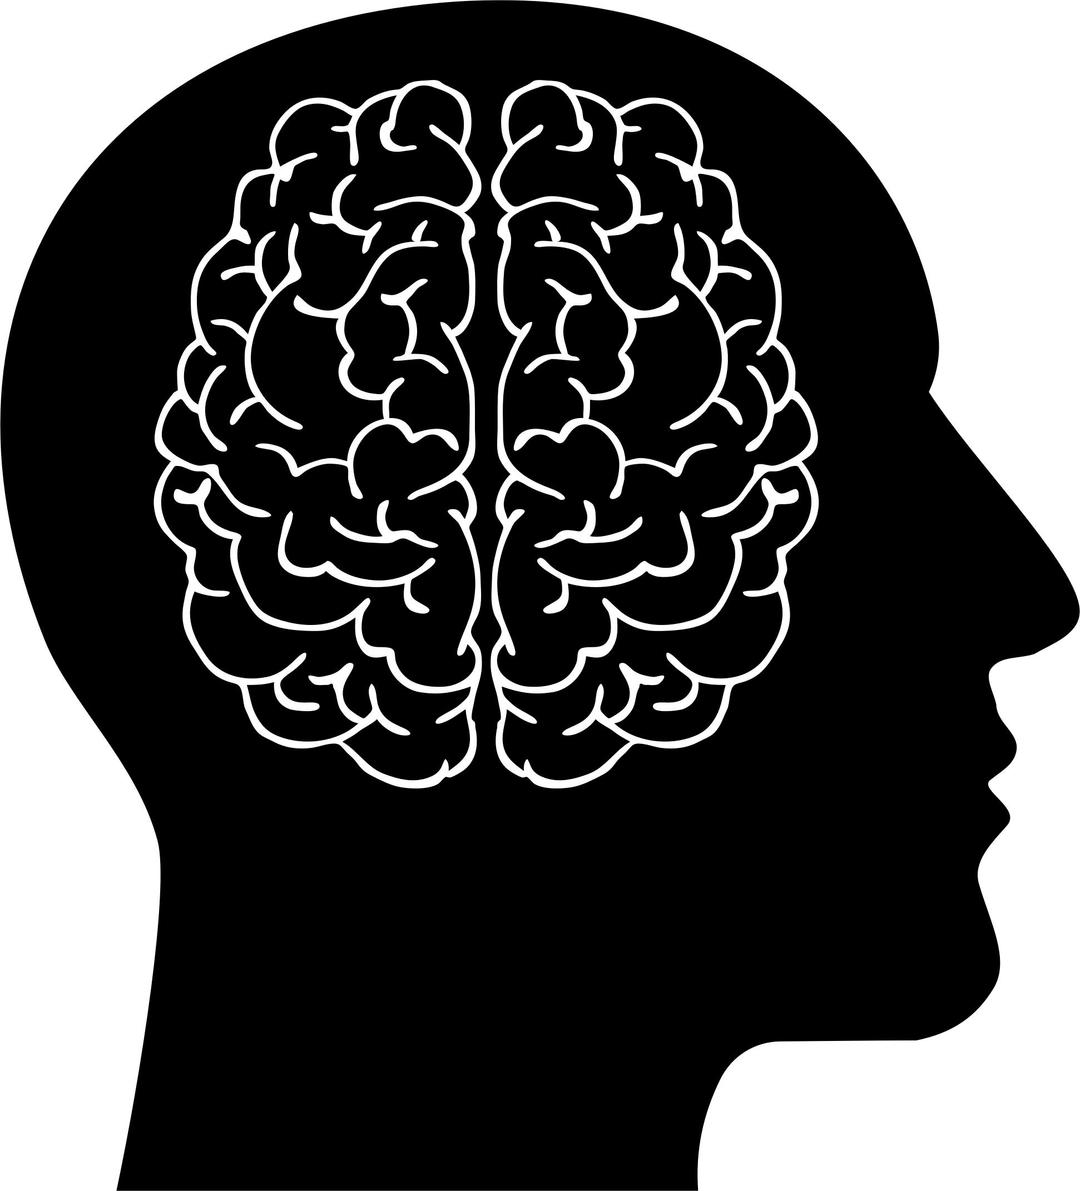 Brain In Man Head png transparent